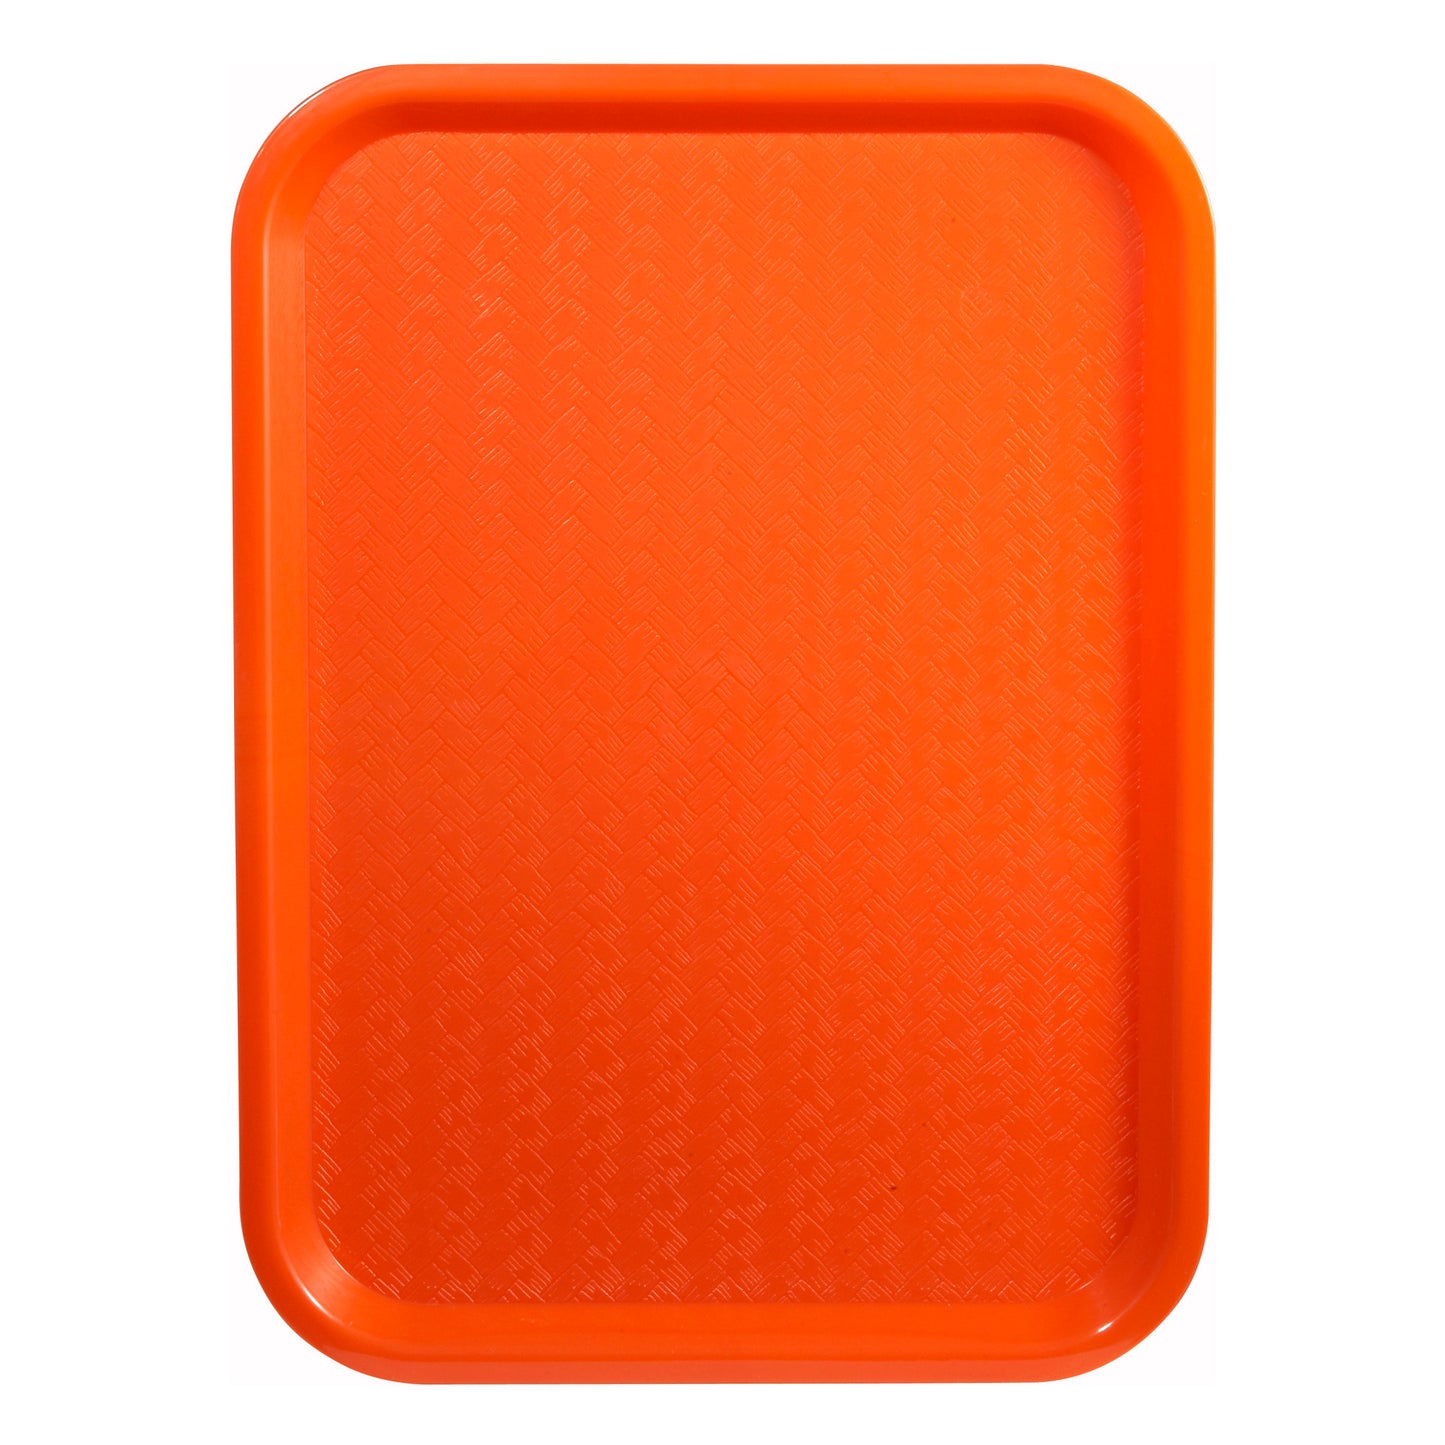 High Quality Plastic Cafeteria Tray - 10" x 14", Orange